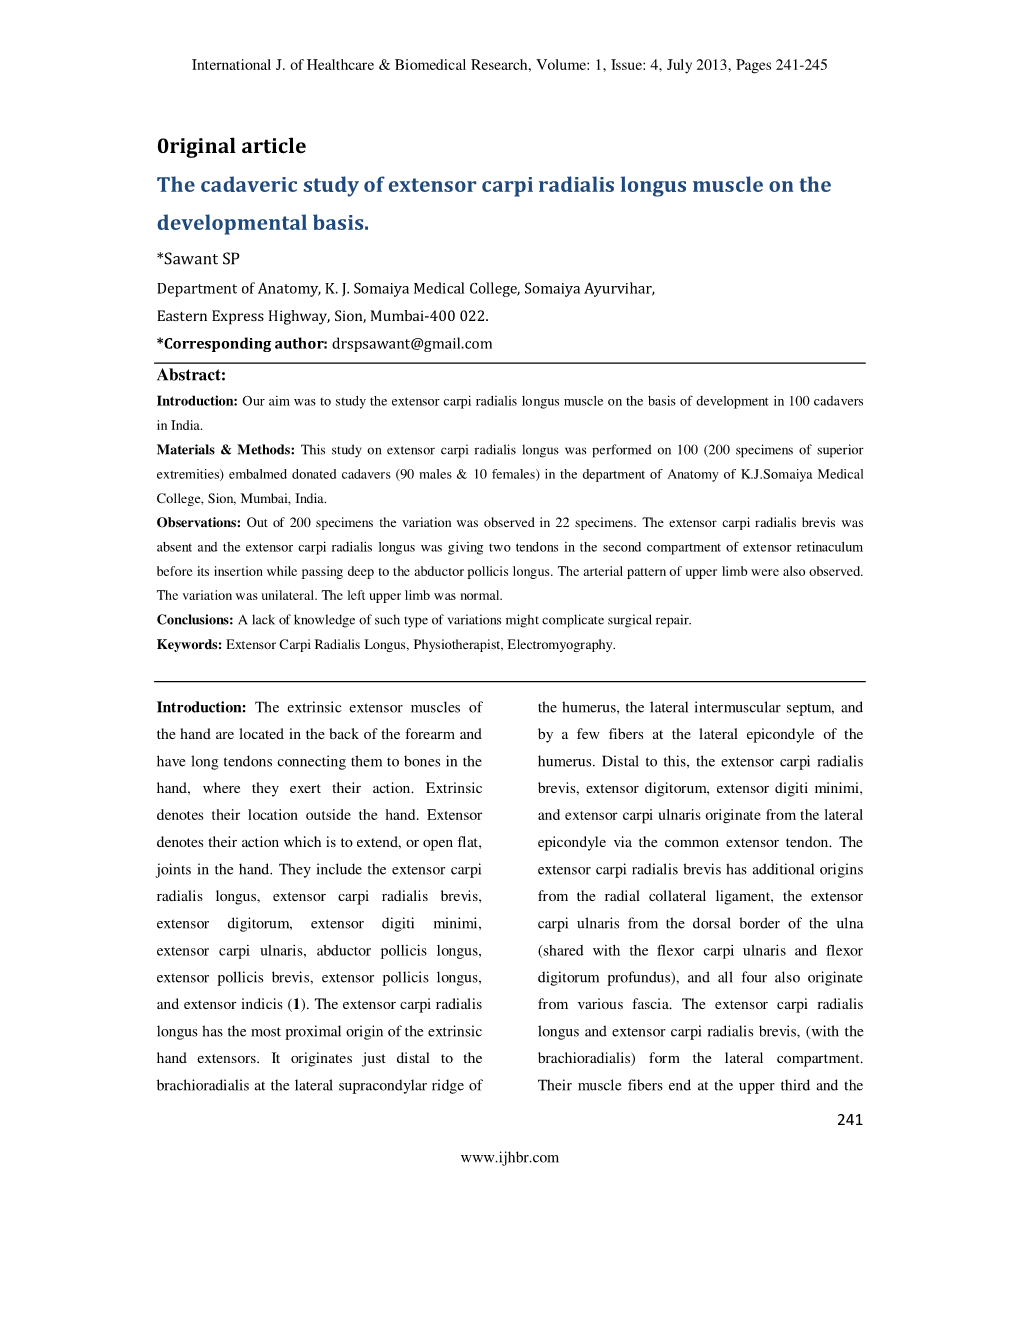 0Riginal Article the Cadaveric Study of Extensor Carpi Radialis Longus Muscle on the Developmental Basis